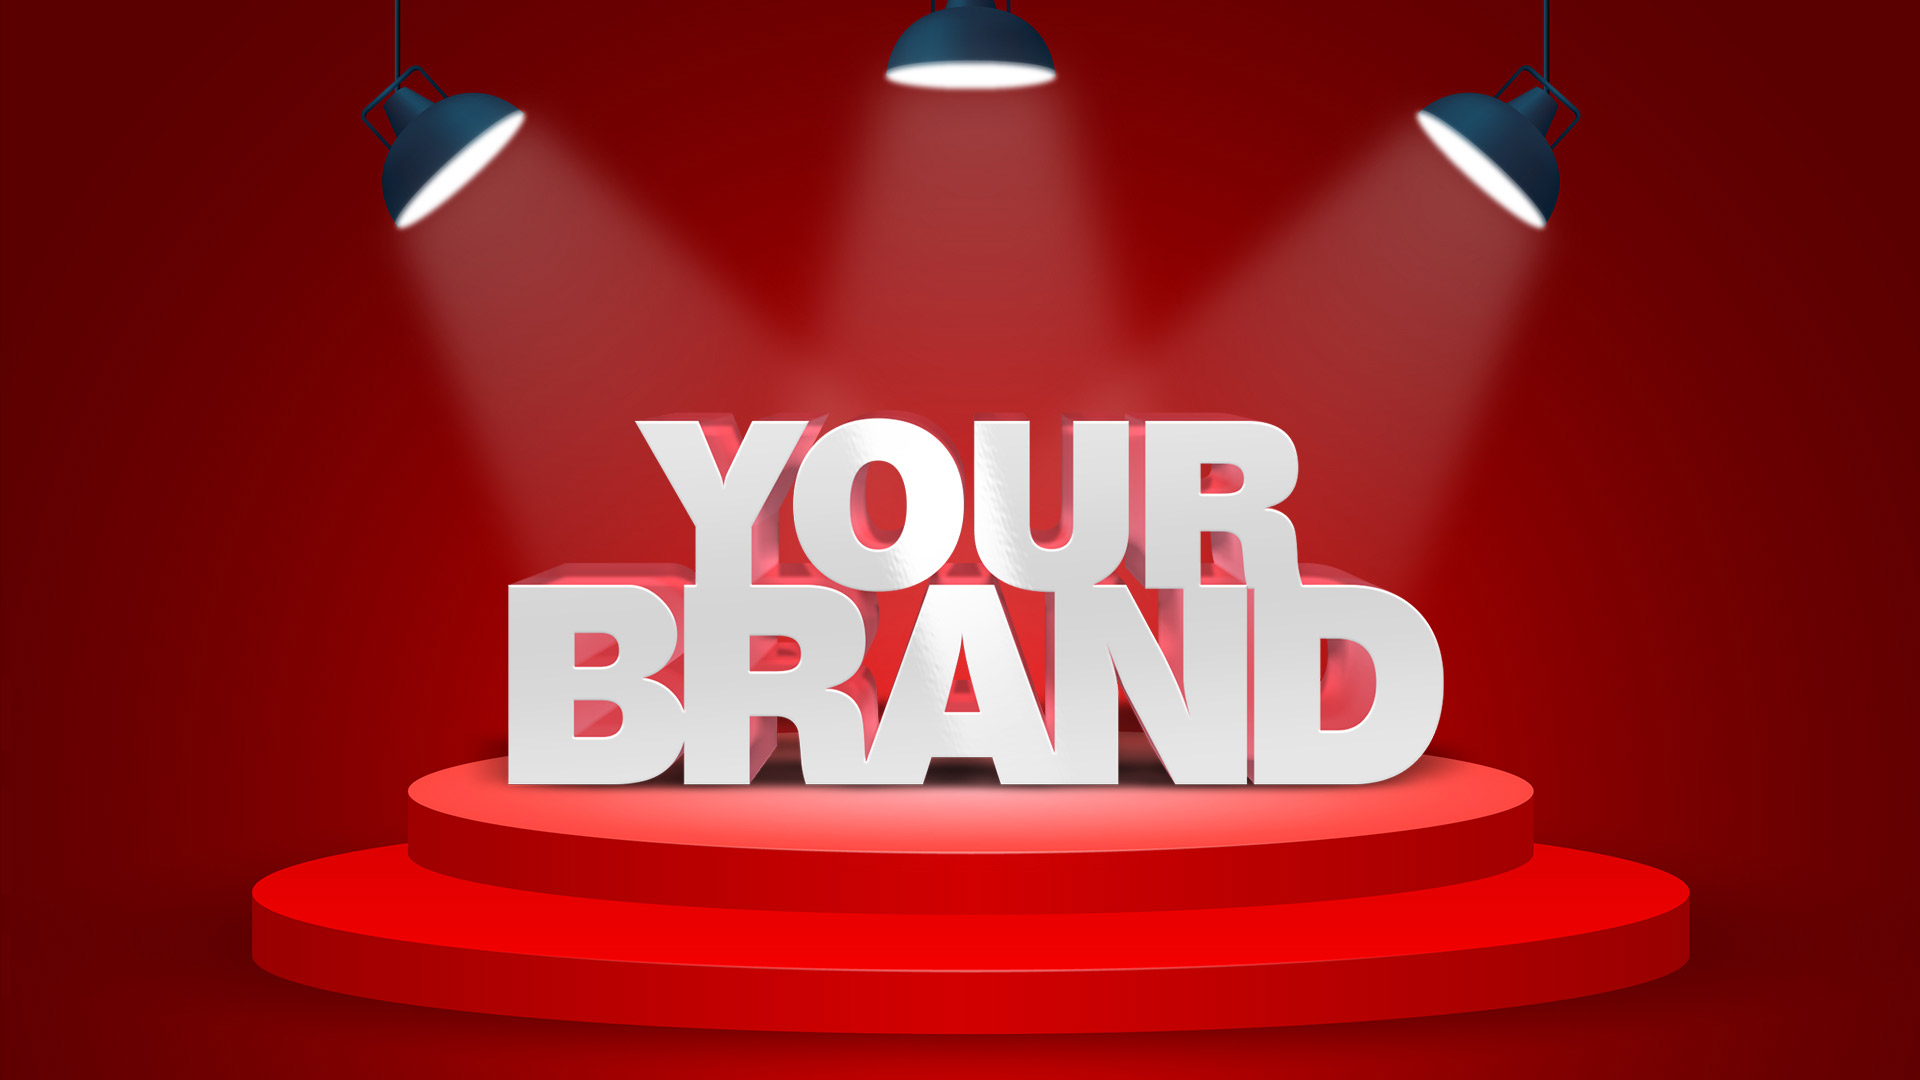 ISH News Advertises Your Brand